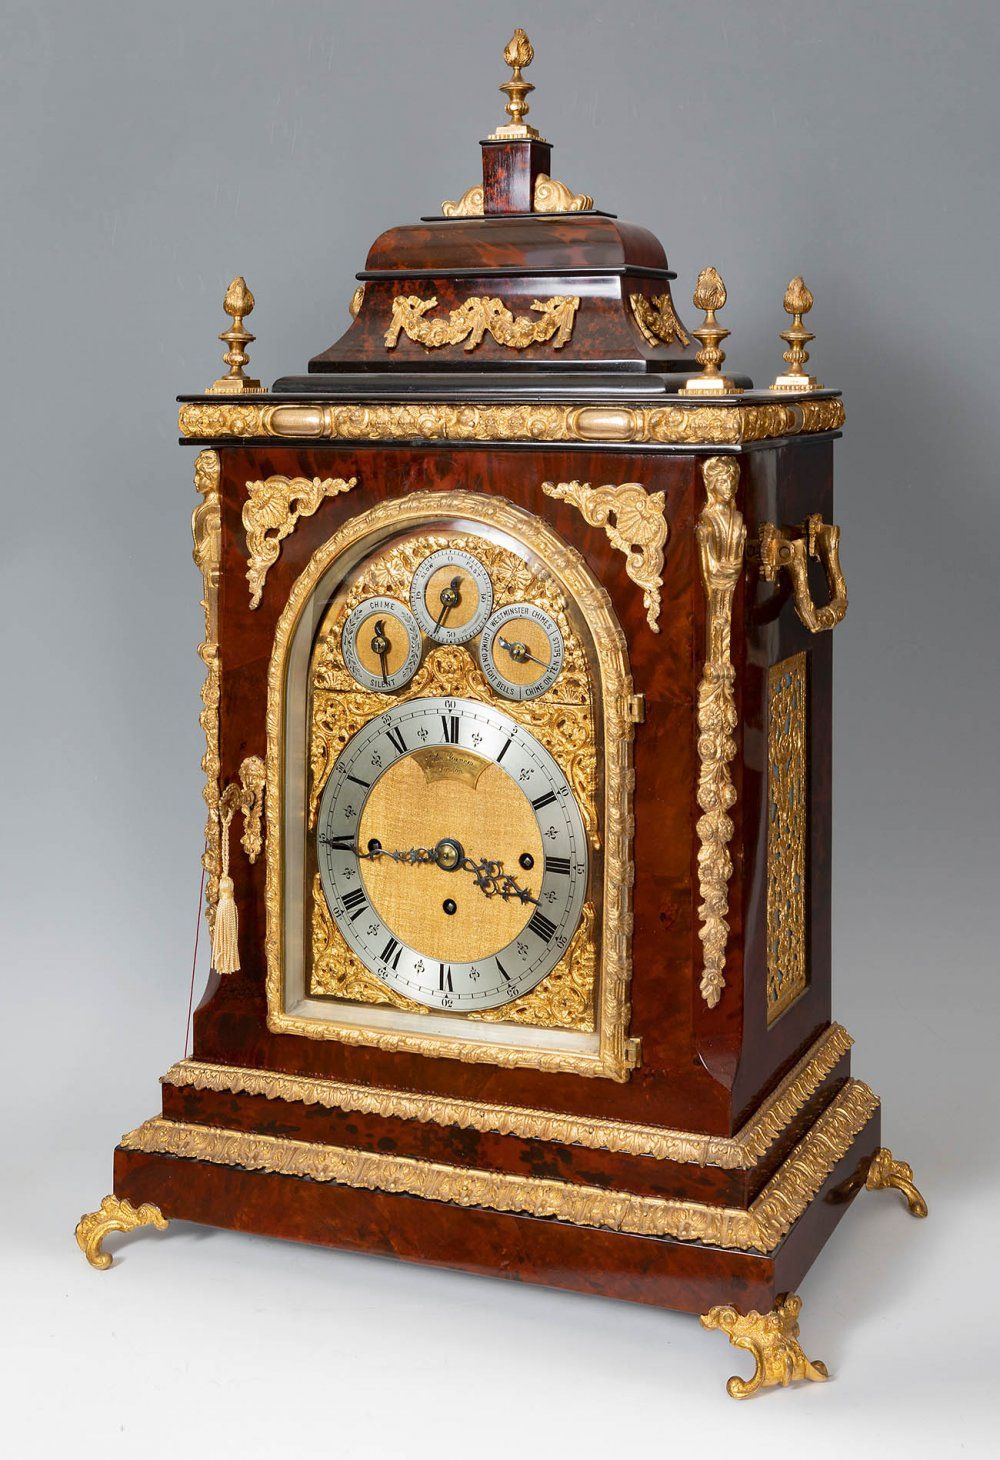 Null 维多利亚时代的壁炉钟。伦敦，约1820年。
玳瑁和鎏金青铜。
小时、半小时和四分之一小时的报时。
在表盘上刻有：John SPENCER，伦敦。
尺寸&hellip;